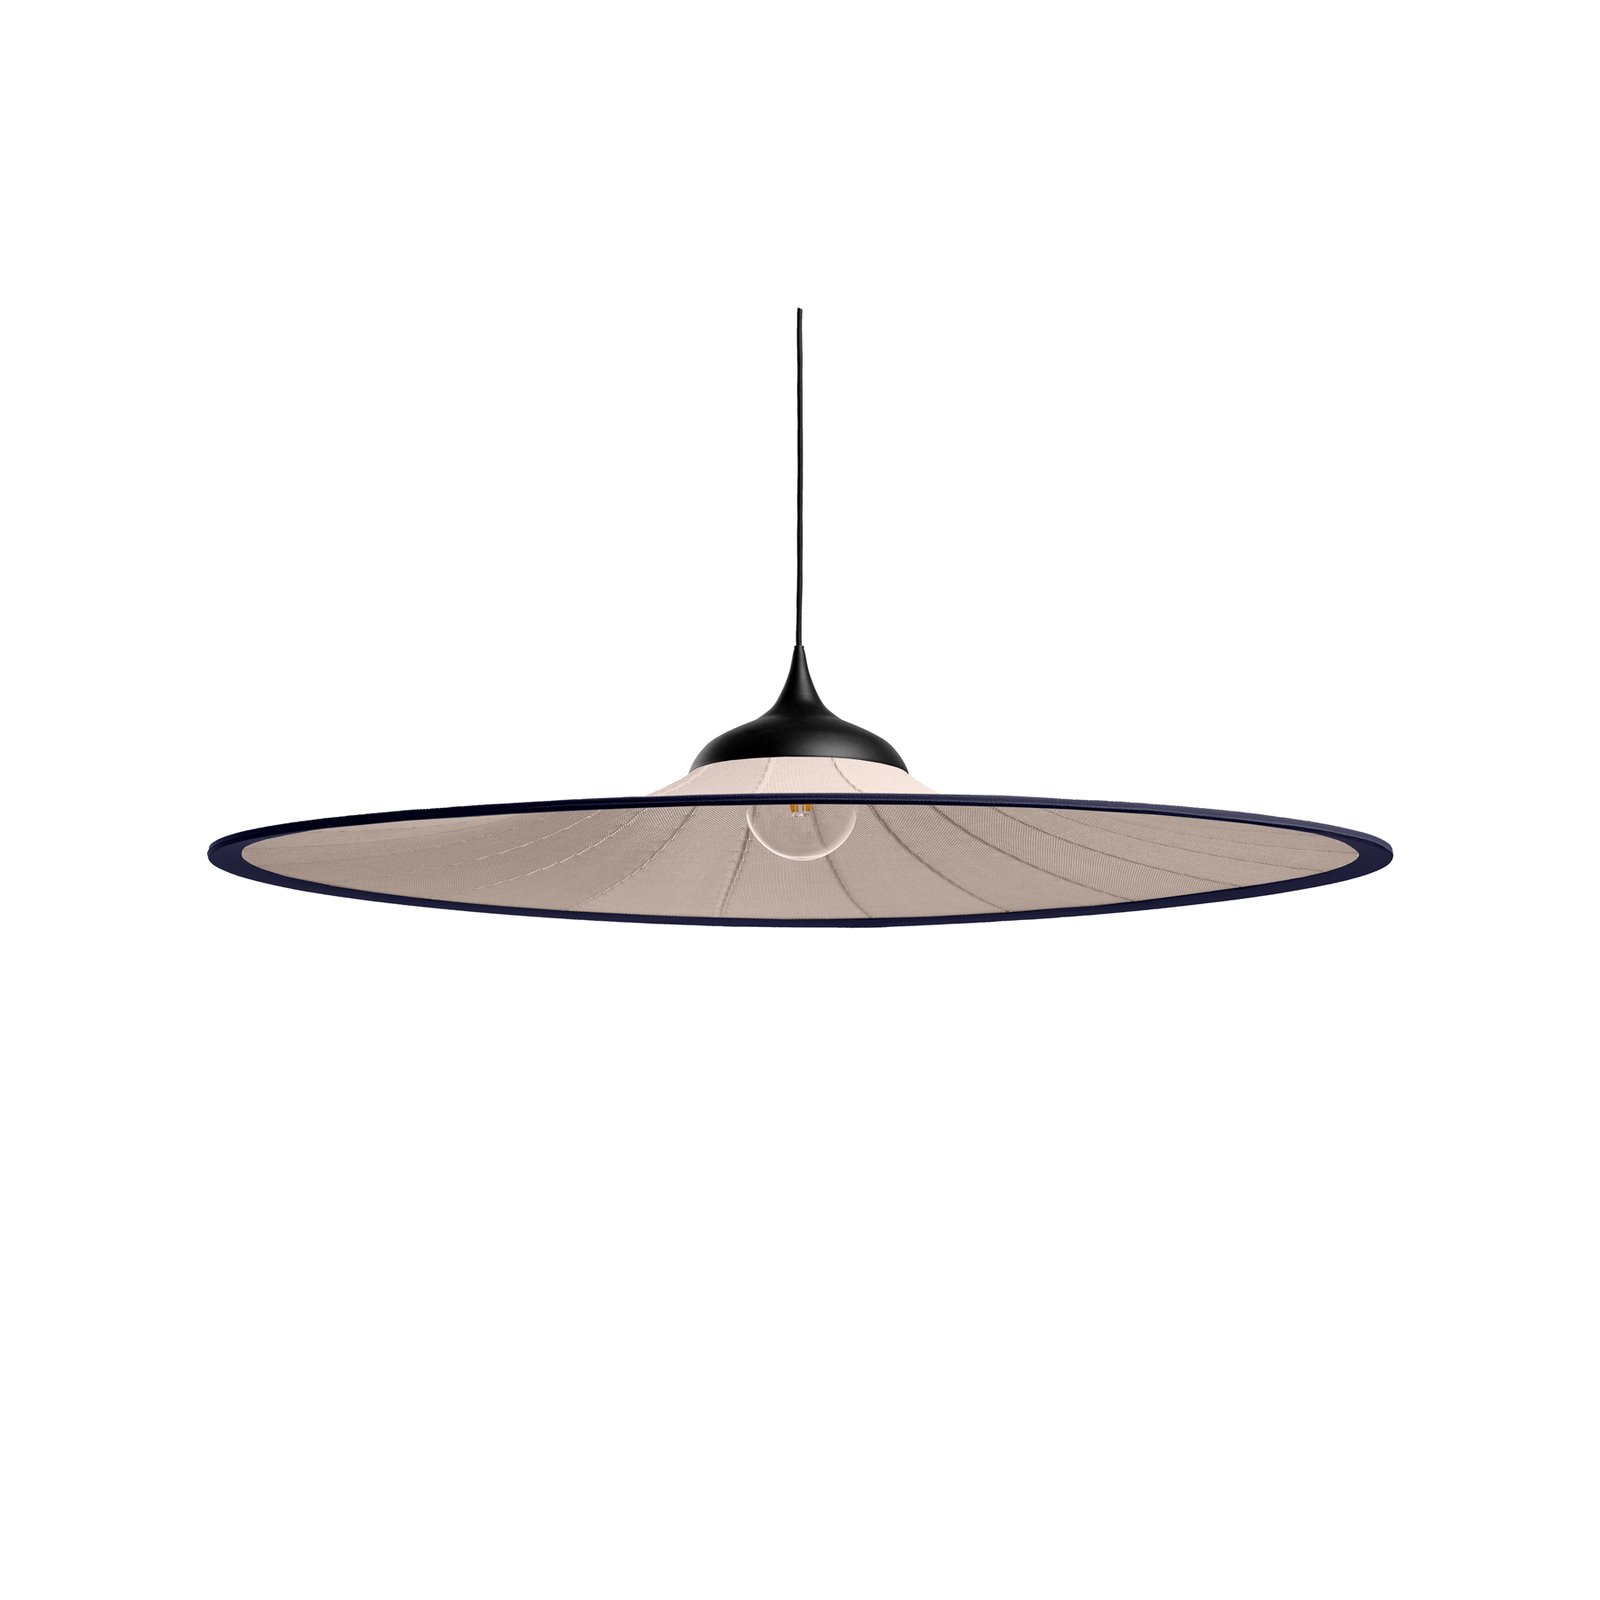 Lampa wisząca Easy Light Bloom, IP20, Ø 120 cm, kremowy